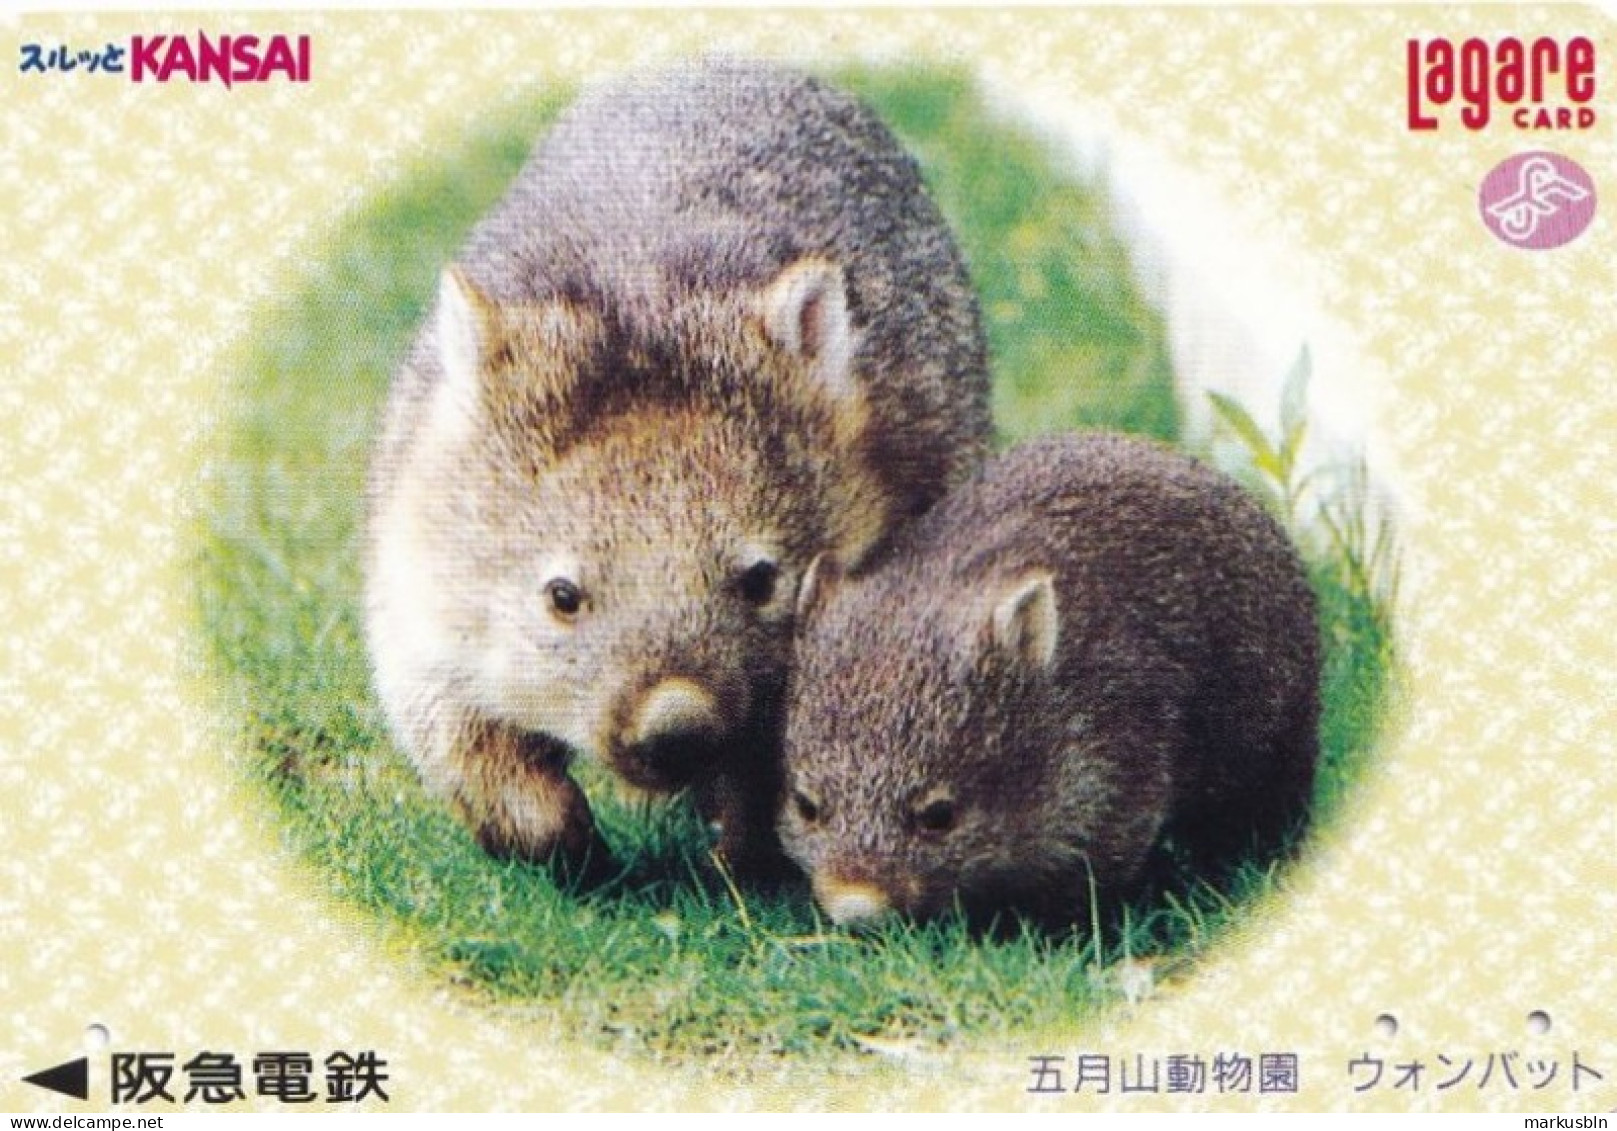 Japan Prepaid Lagare Card 2000 - Kansai Animals Wombat - Japon